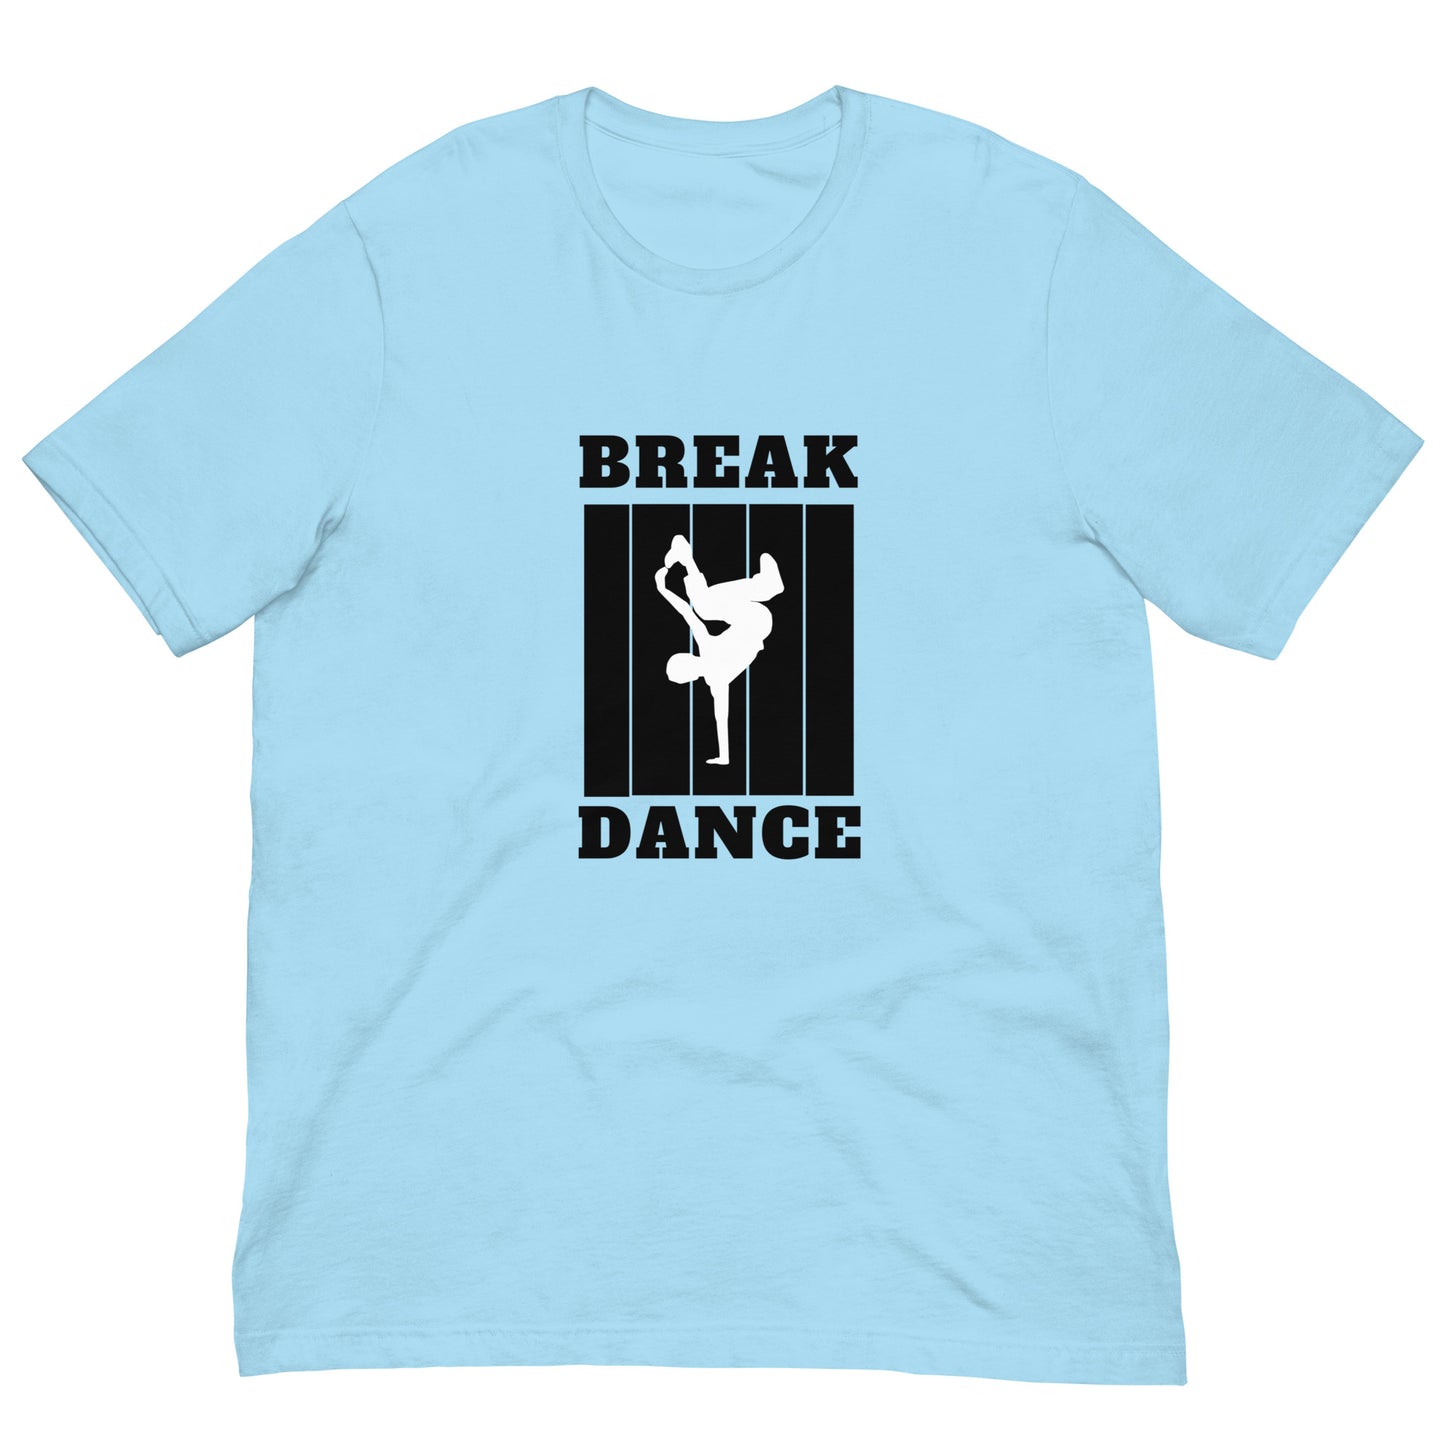 BREAK DANCE - Unisex t-shirt